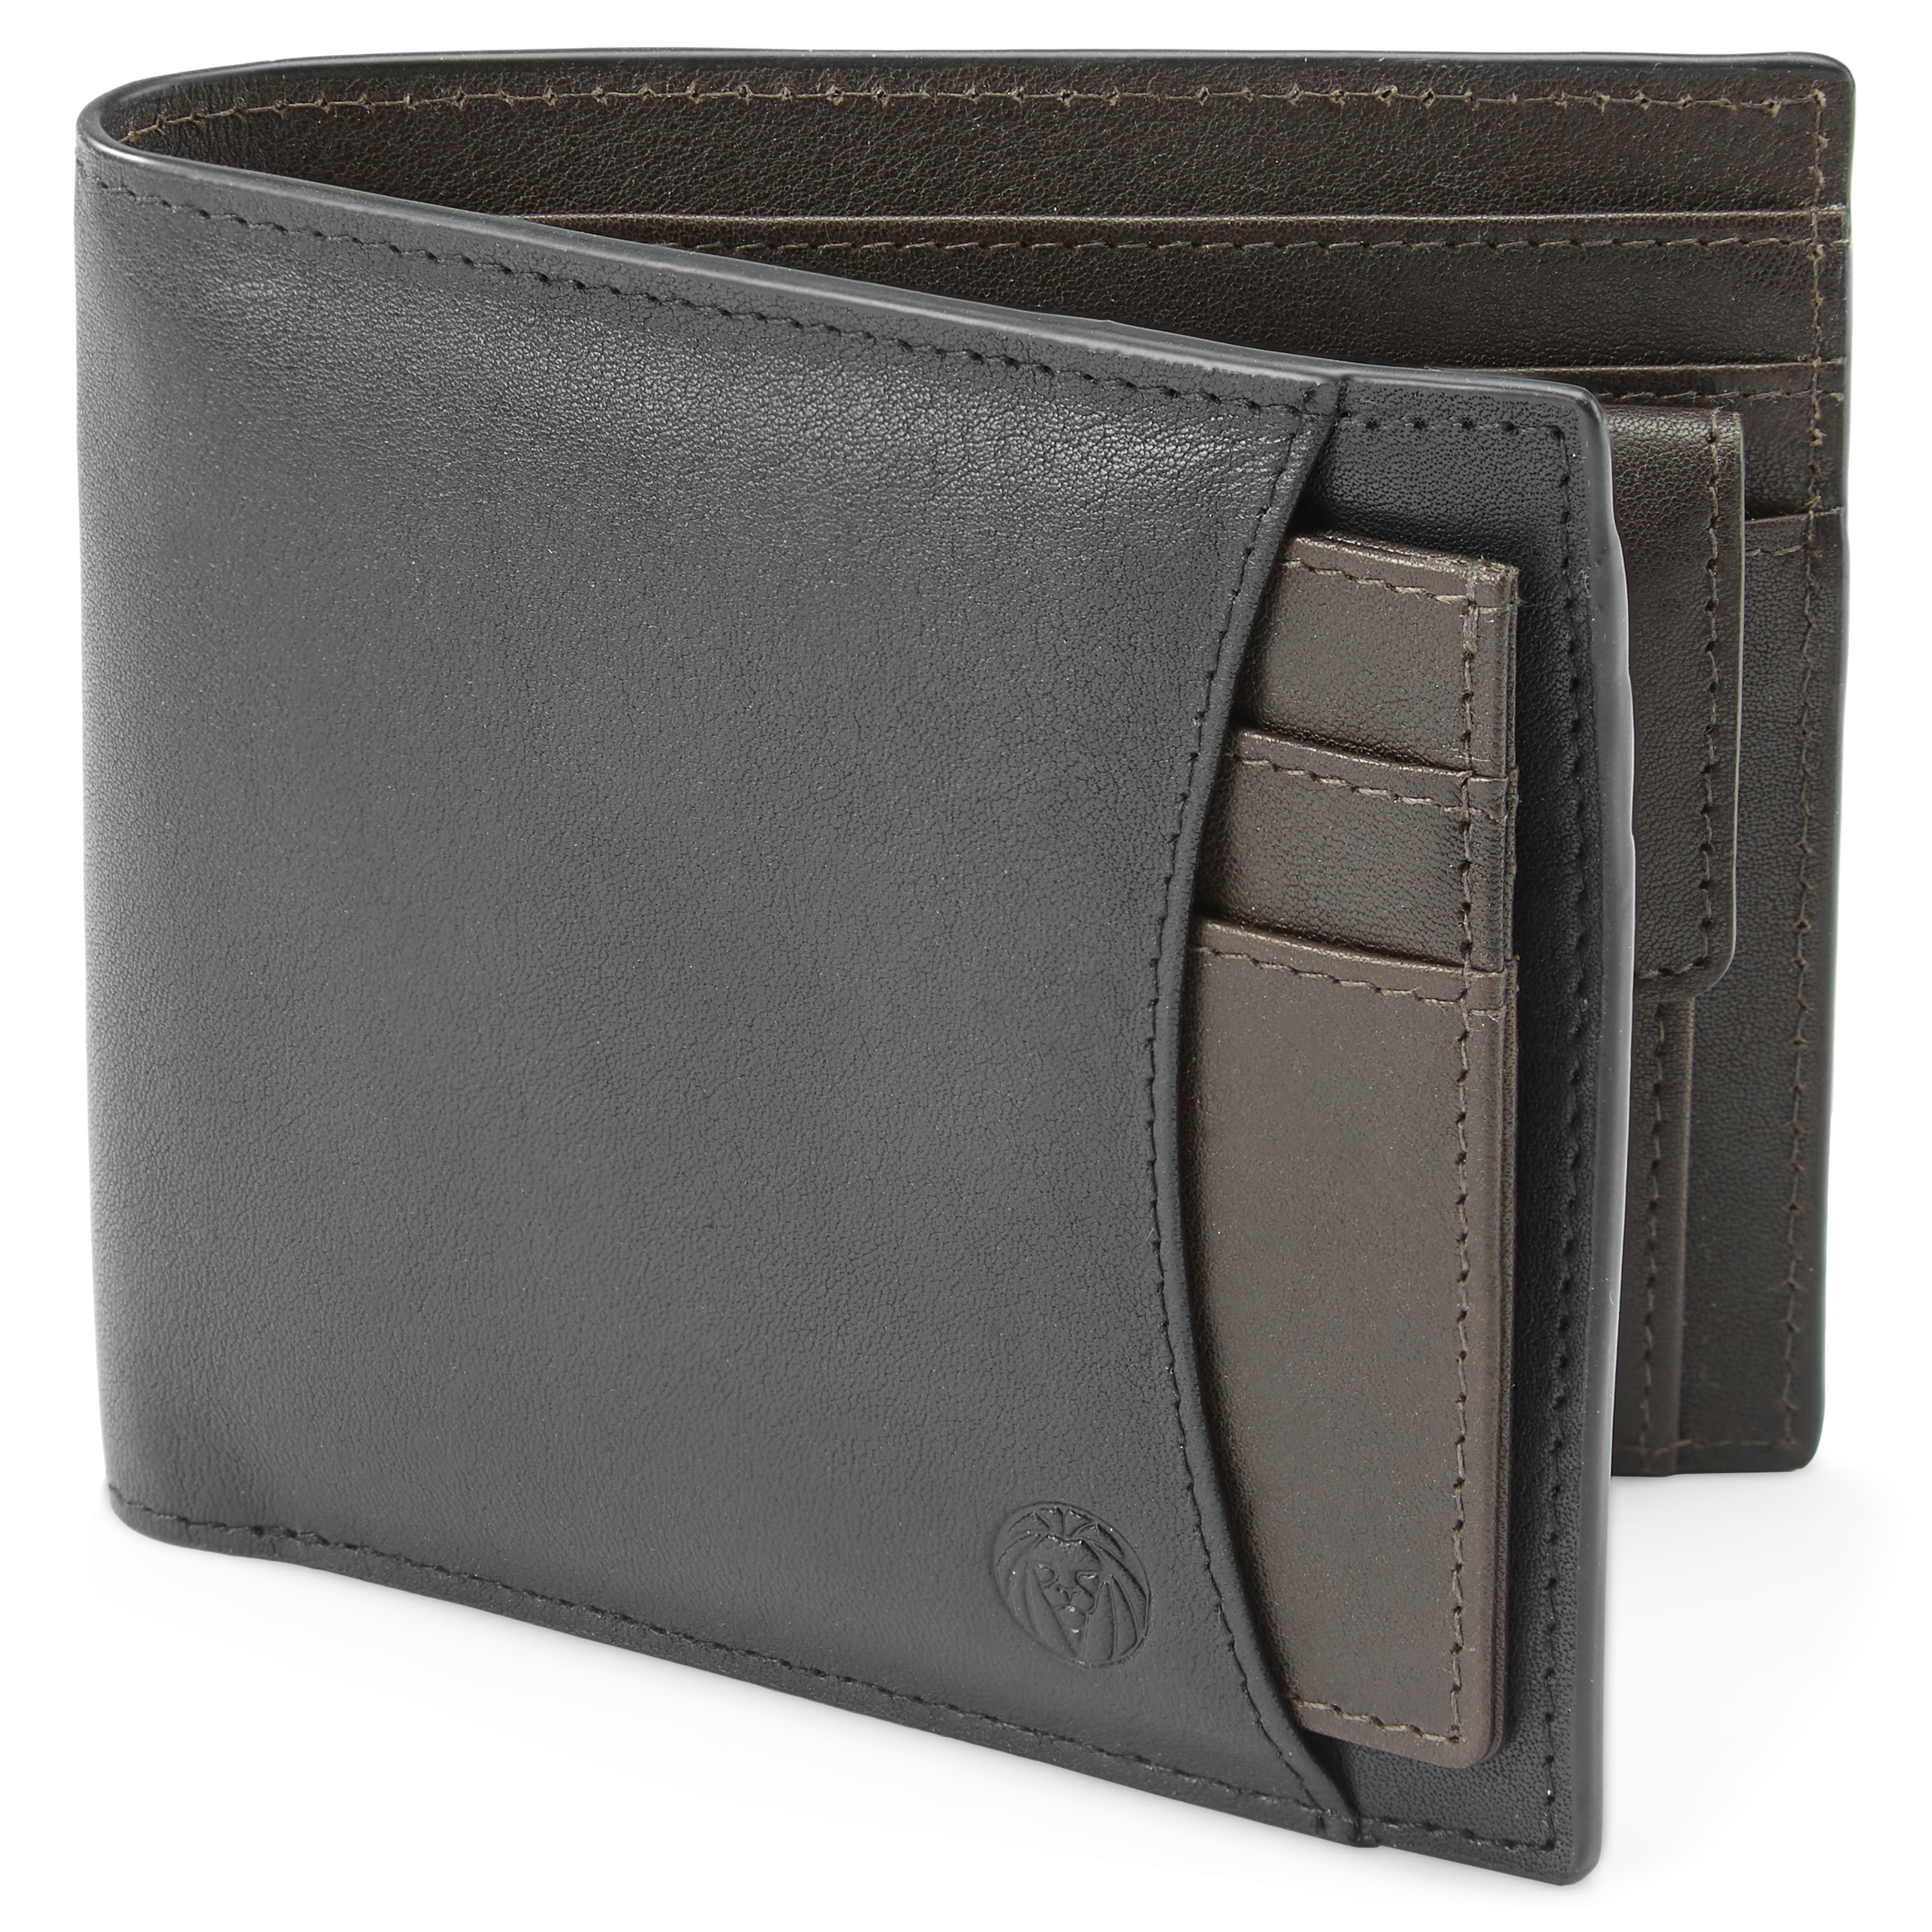 Lincoln černá a tmavě hnědá kožená peněženka a pouzdro na karty RFID